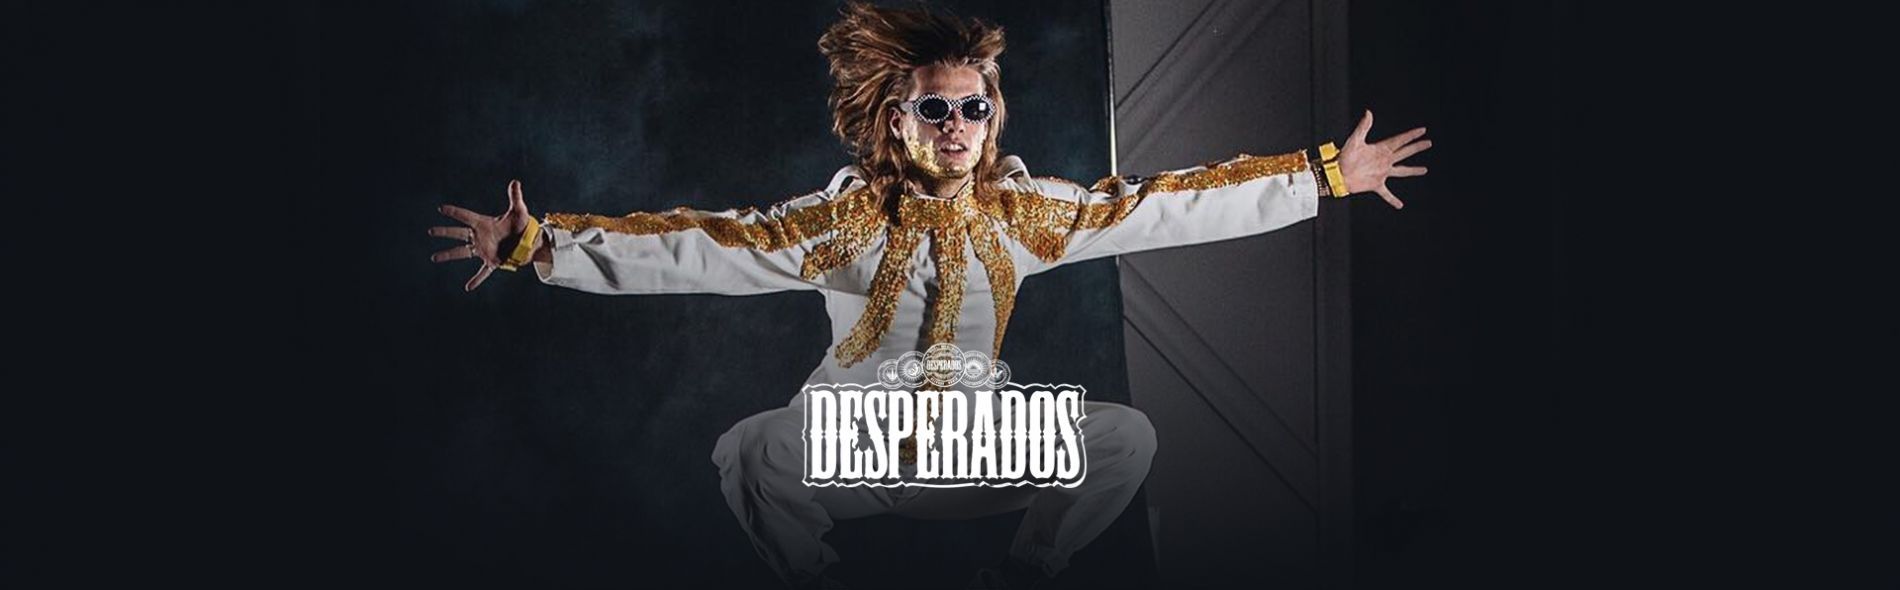 Tony Junior's Vegas trip with Desperados' 'Bass Drop Experiment'